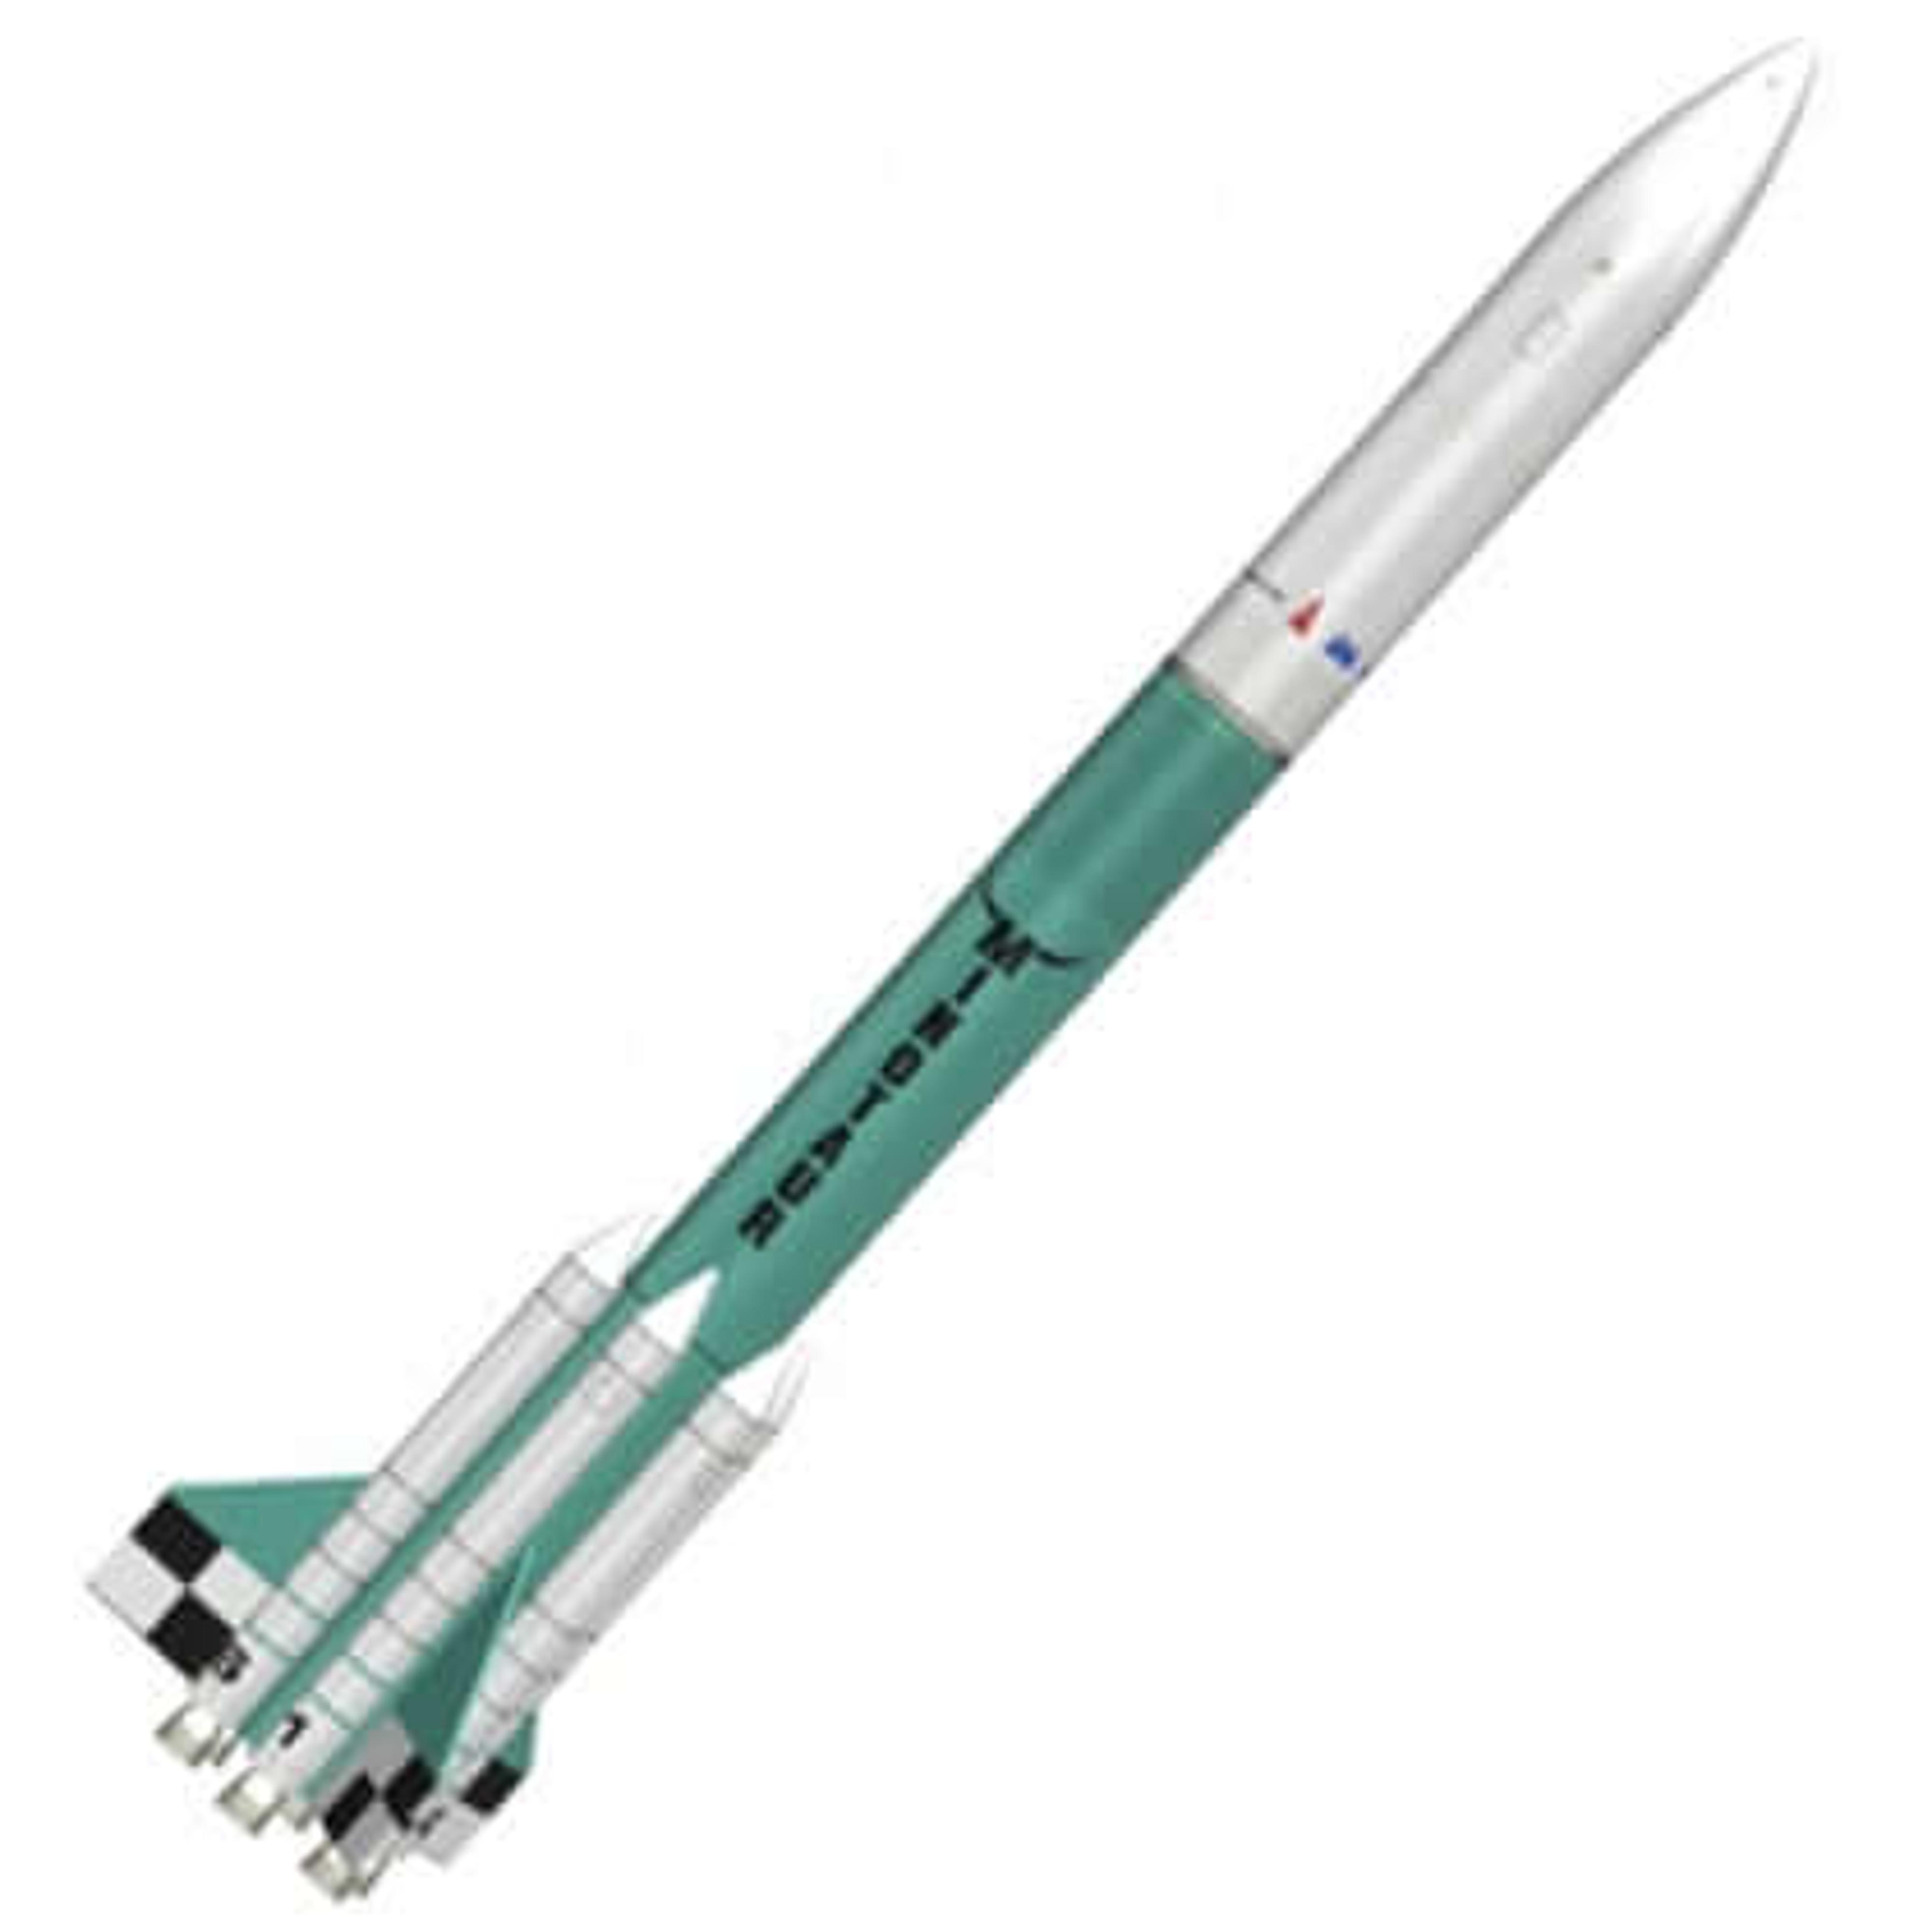 Enerjet Minotaur Advanced Rocketry Kit